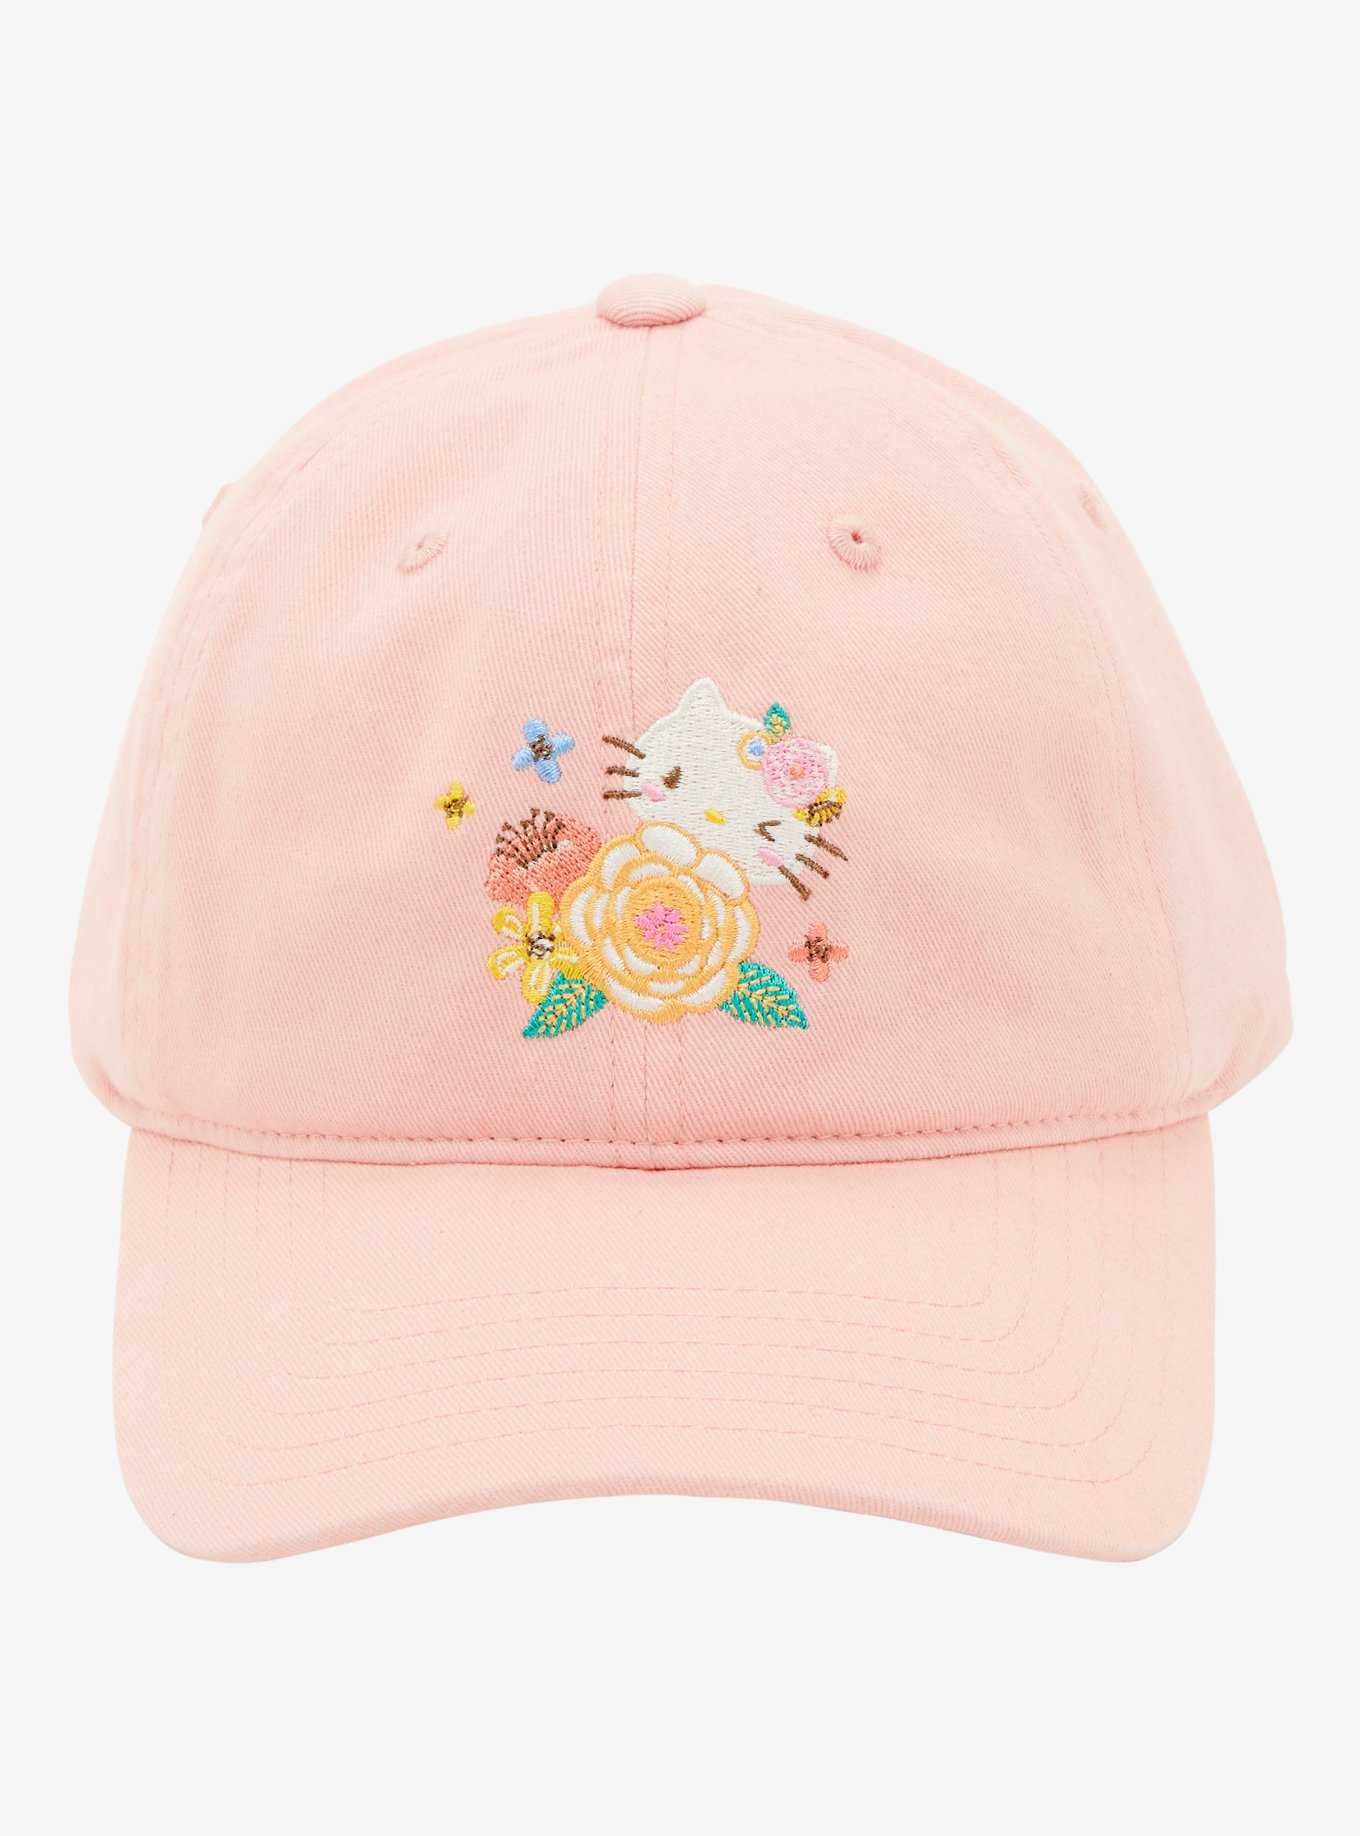 Sanrio Hello Kitty Floral Pink Ball Cap - BoxLunch Exclusive, , hi-res